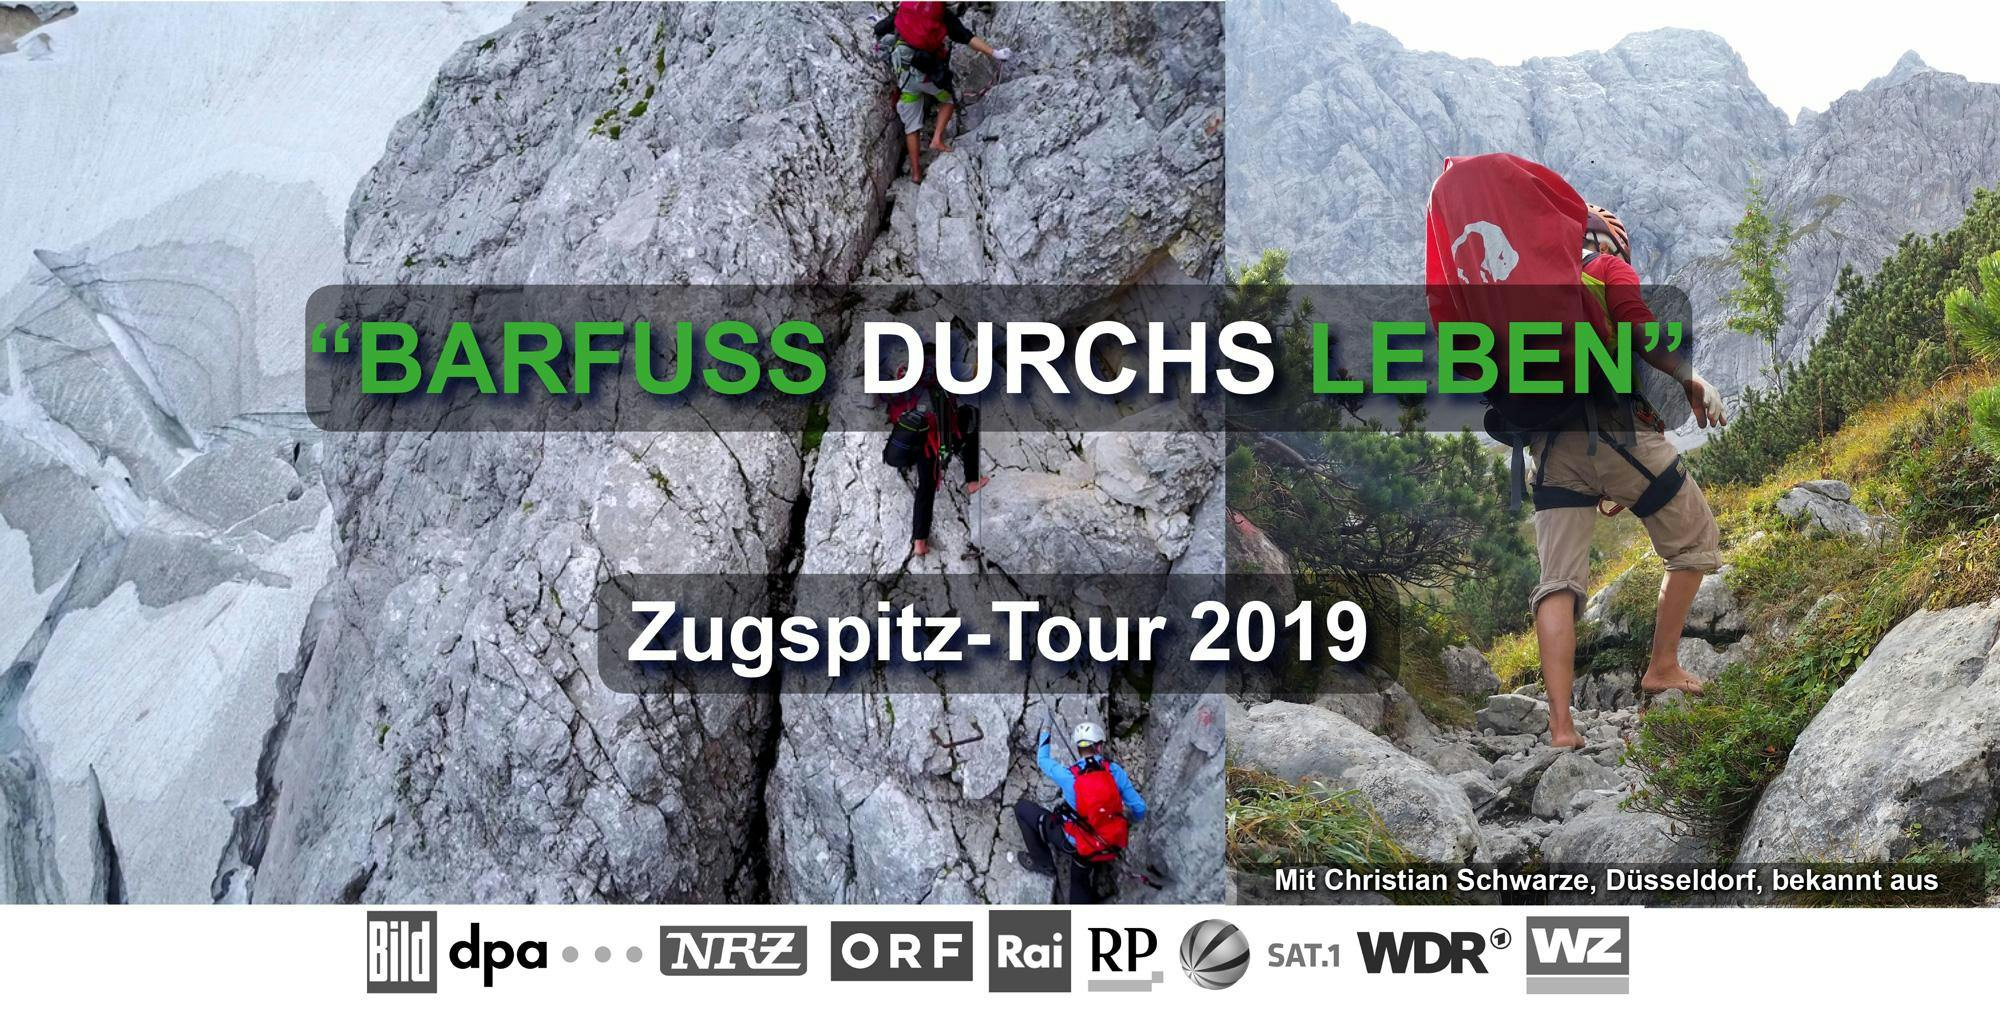 BARFUSS DURCHS LEBEN Zugspitz-Tour 2019